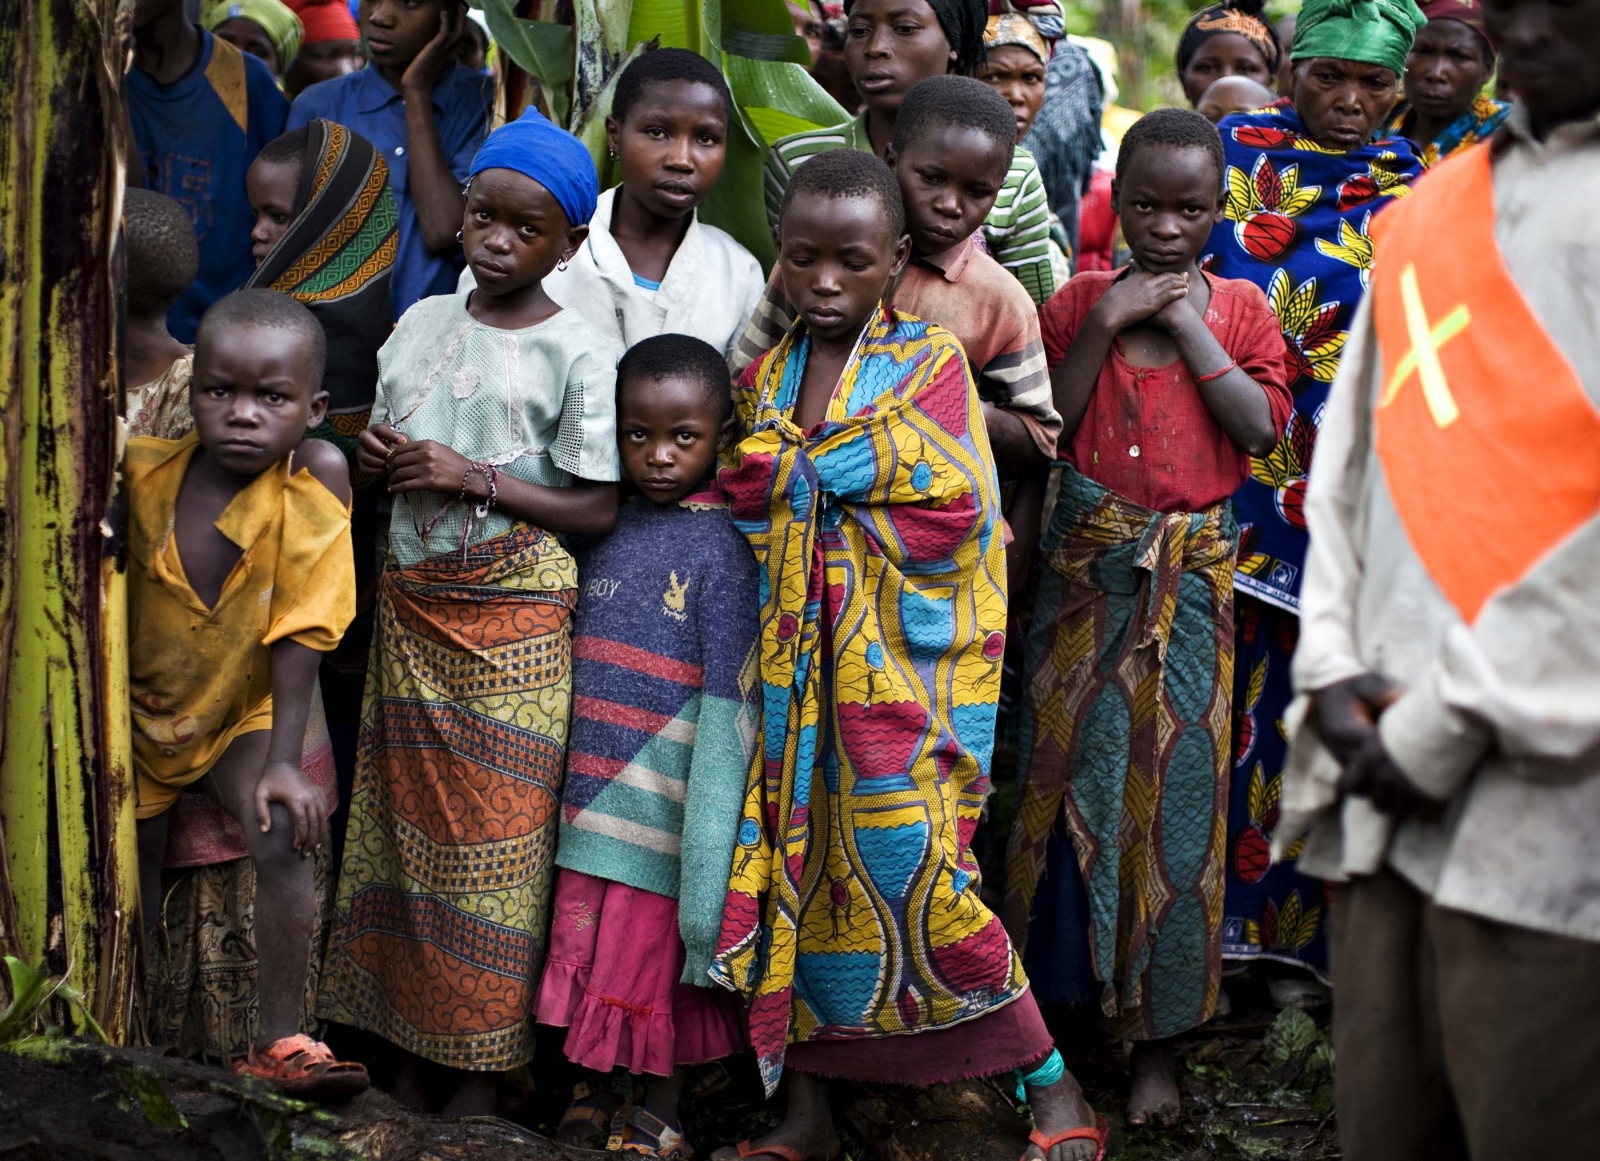 Civilians at risk in DRC